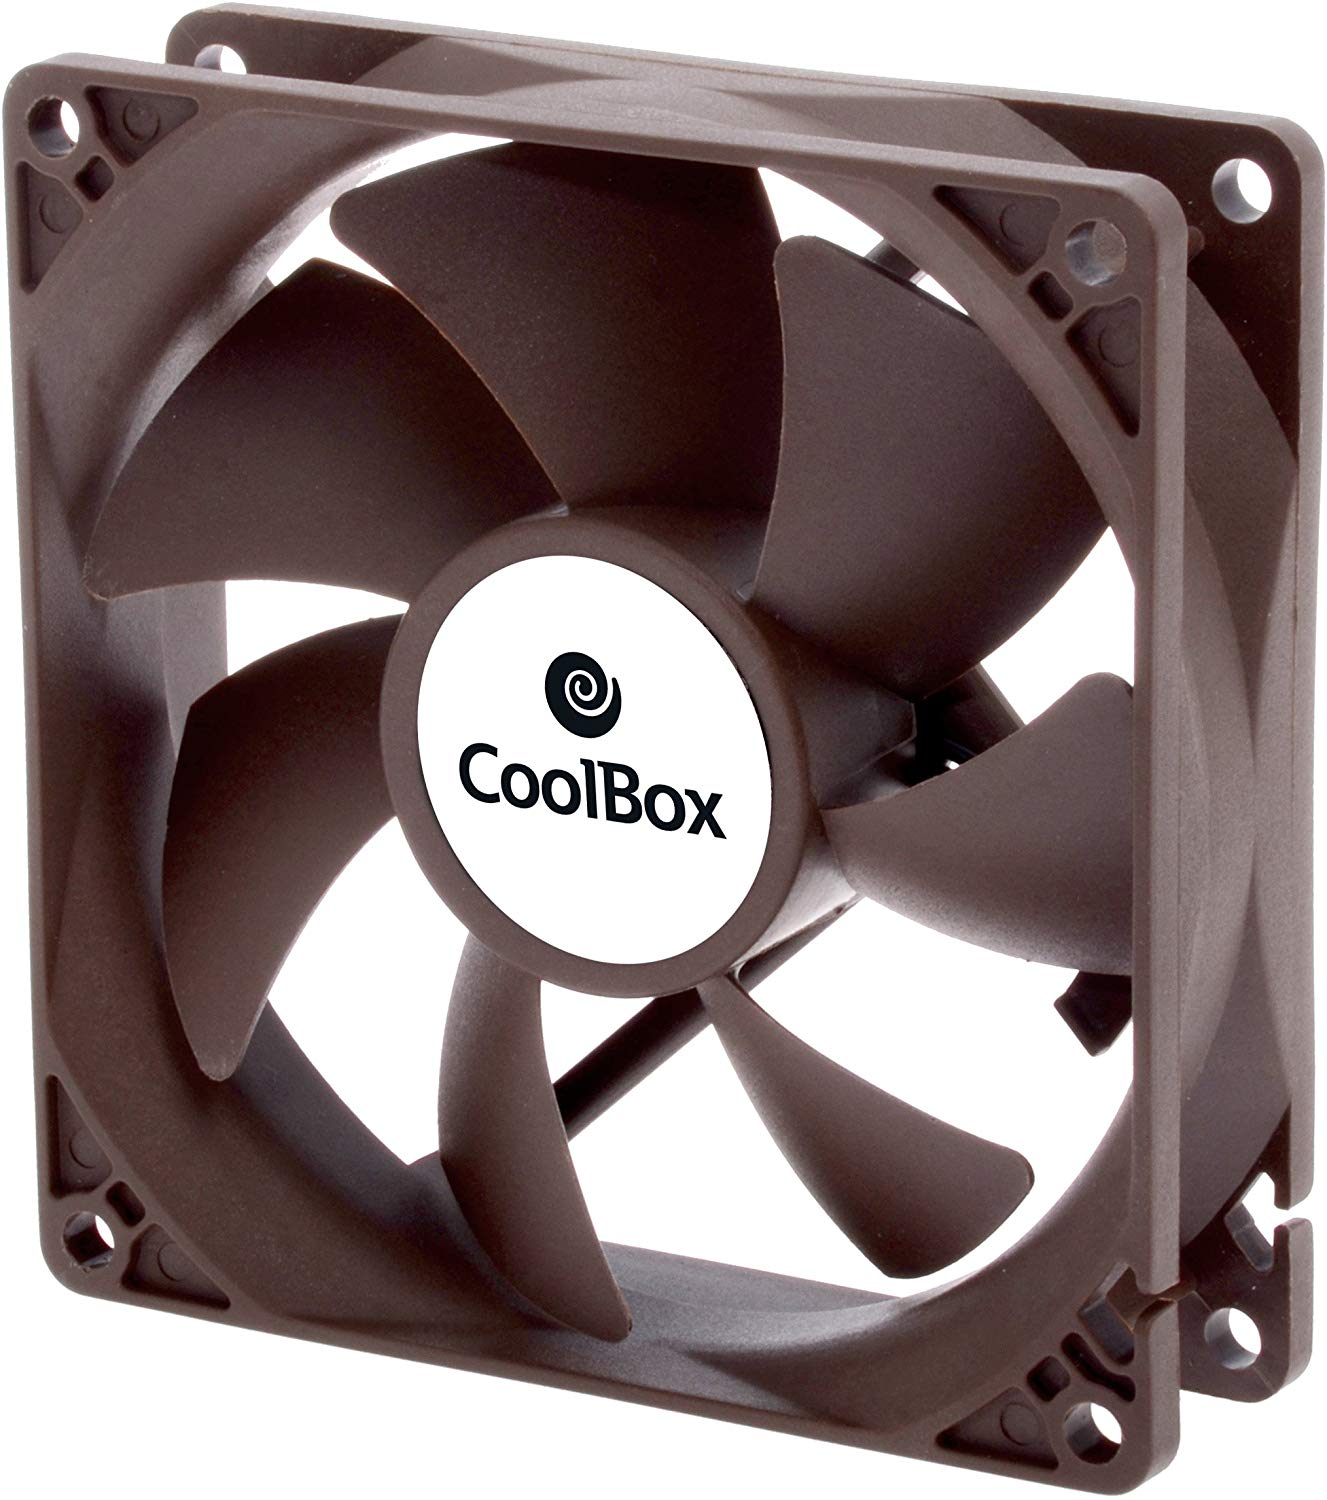  COOLBOX 80X80 12V